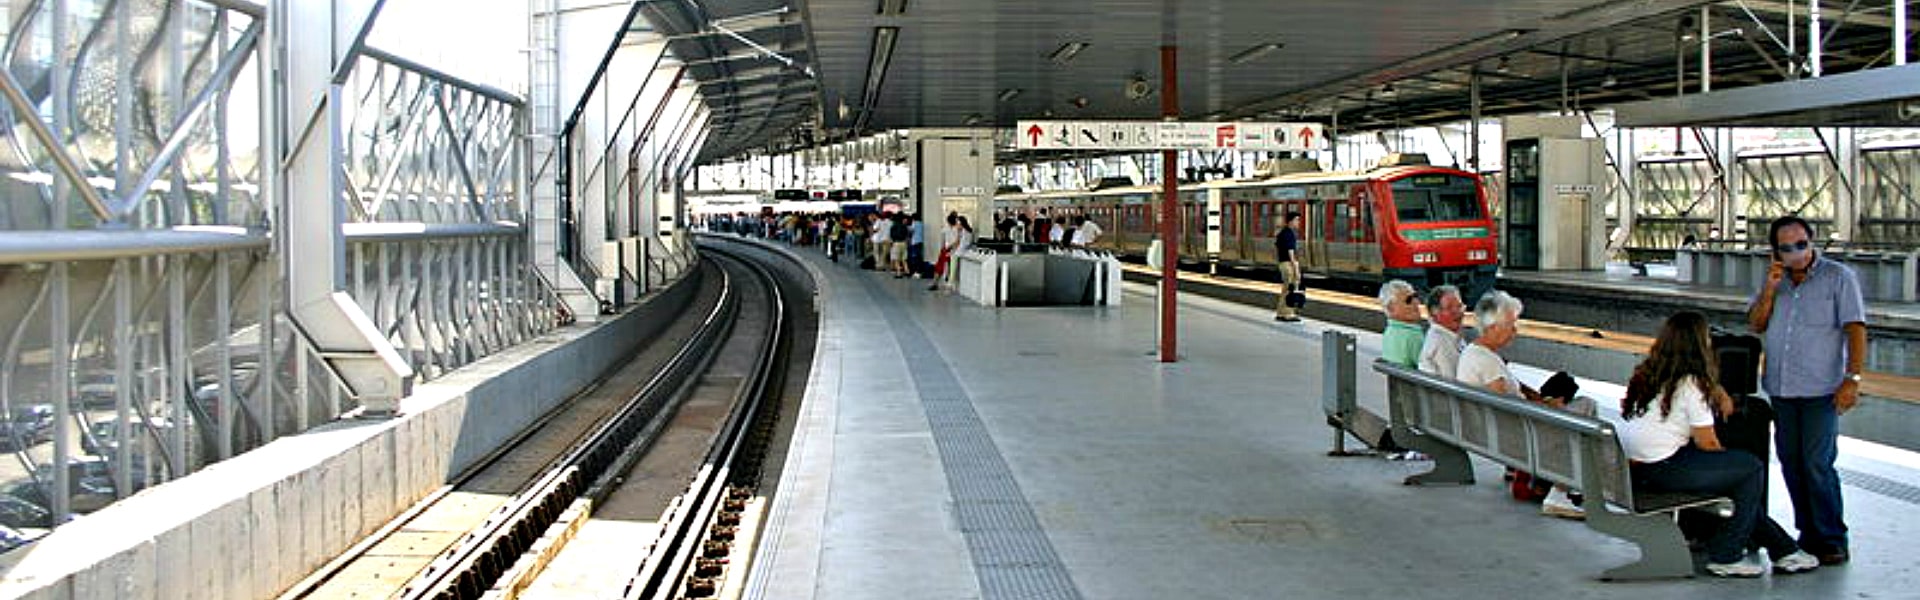  Entrecampos Train Station, Lisbon